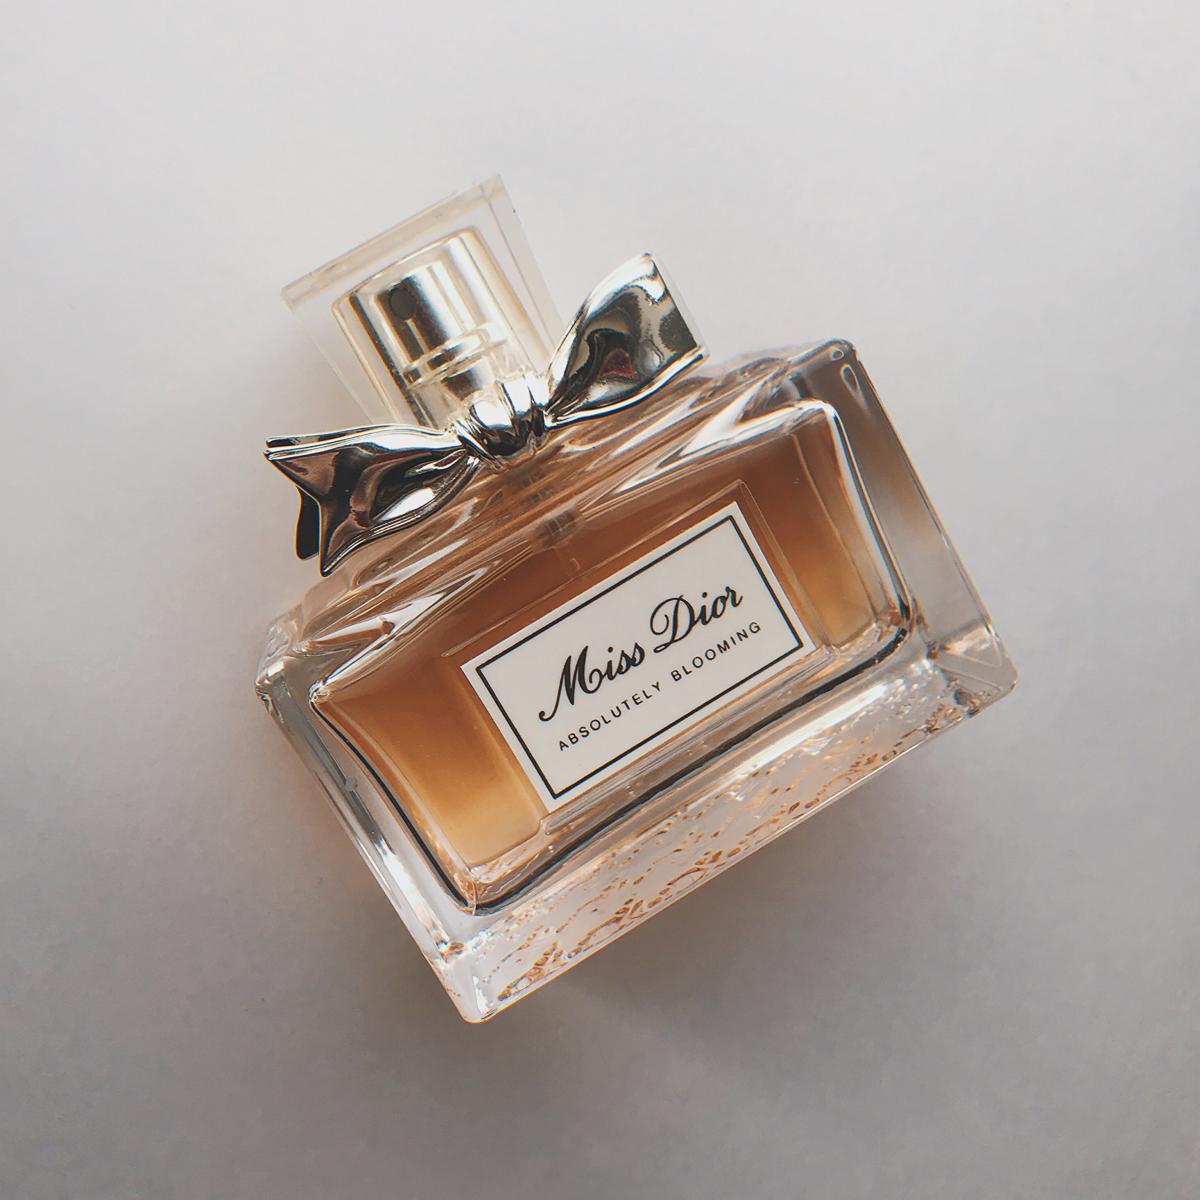 Miss Dior Absolutely Blooming Christian Dior parfum - un parfum pour